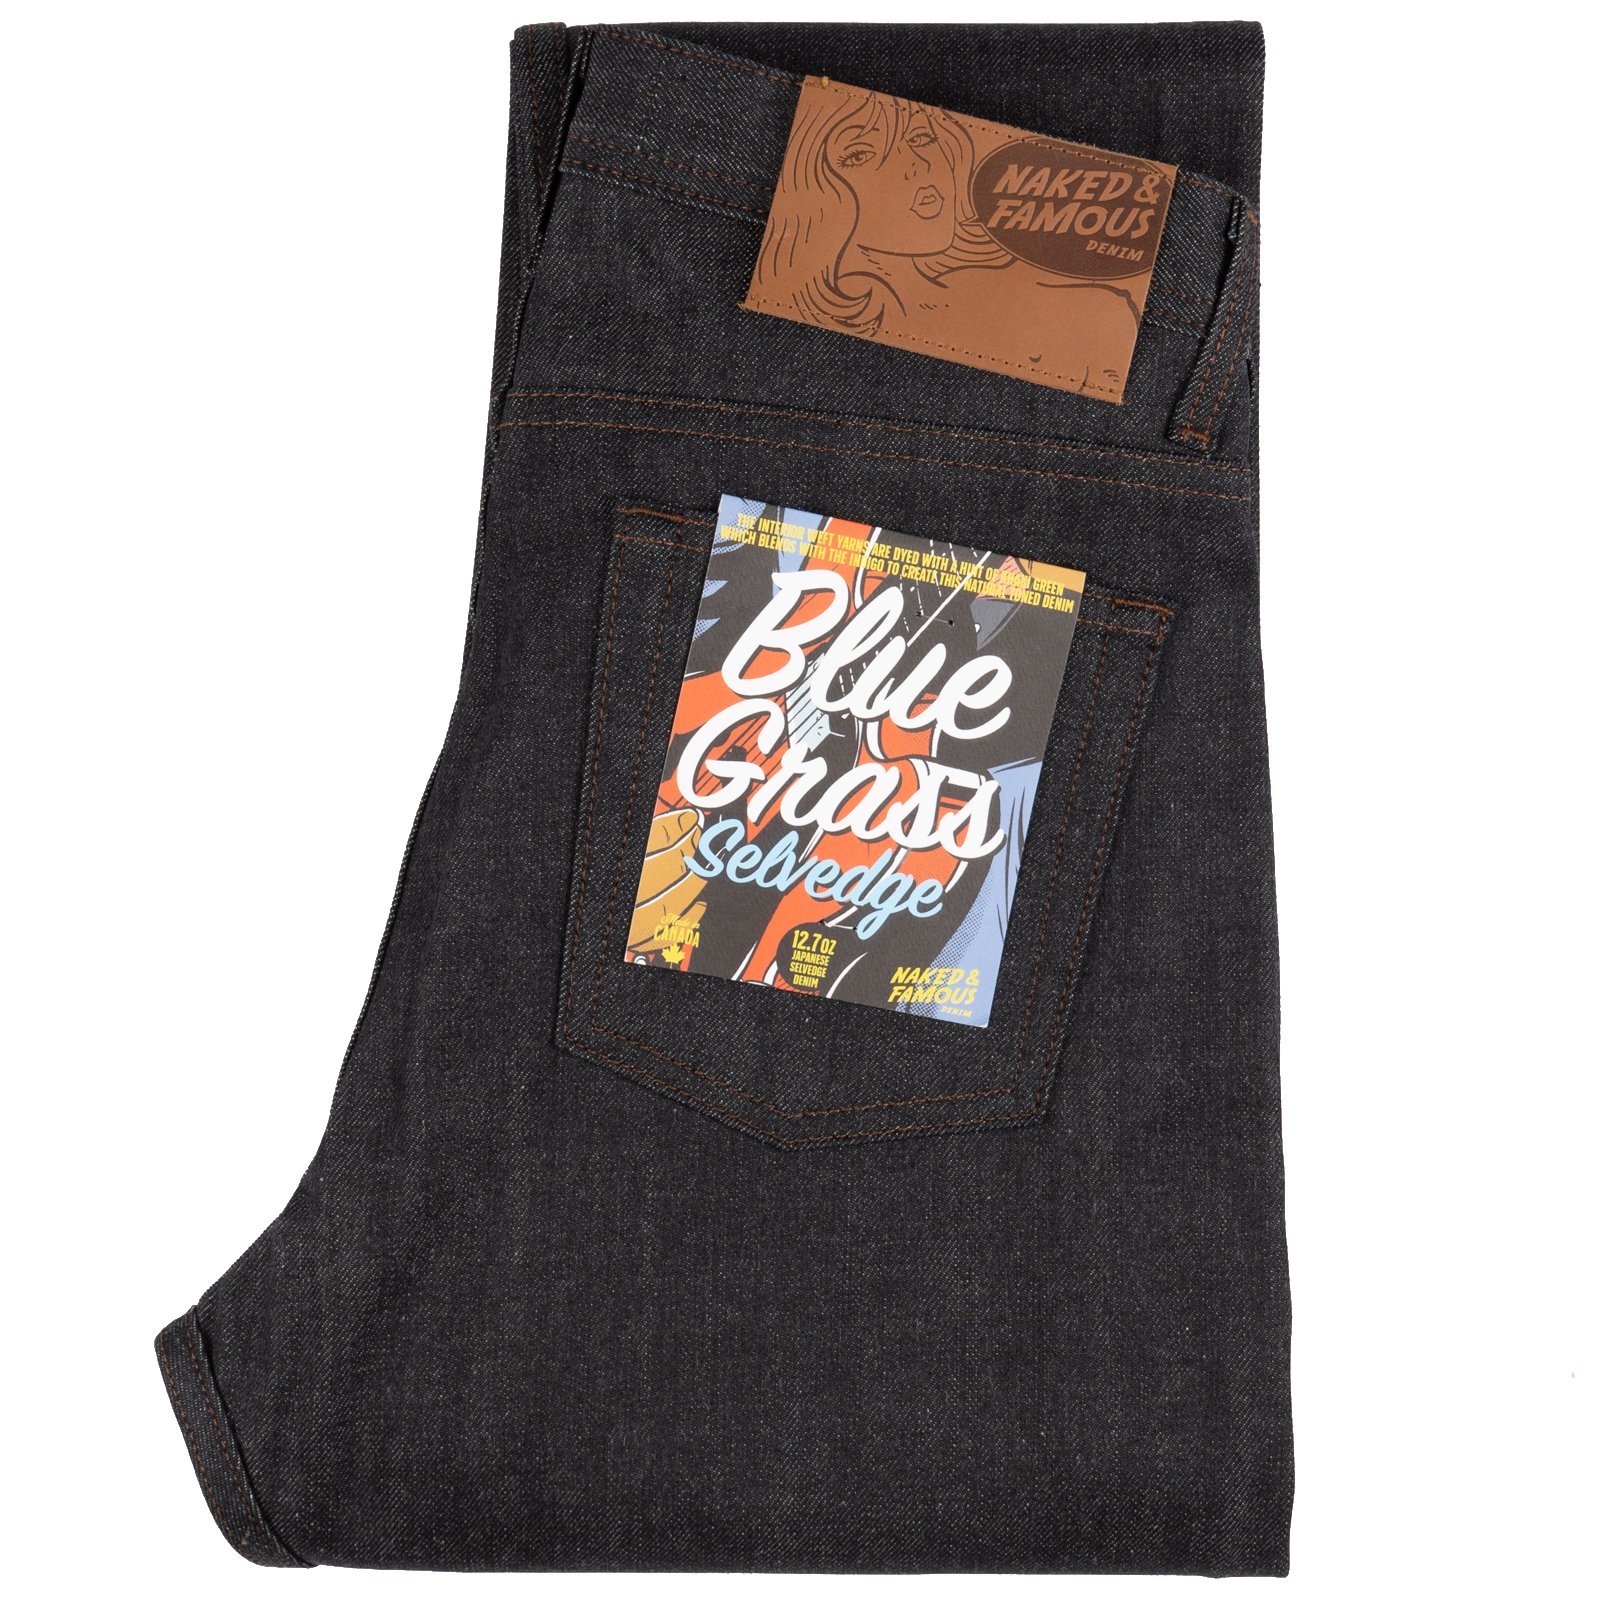  Blue Grass Jeans - folded 